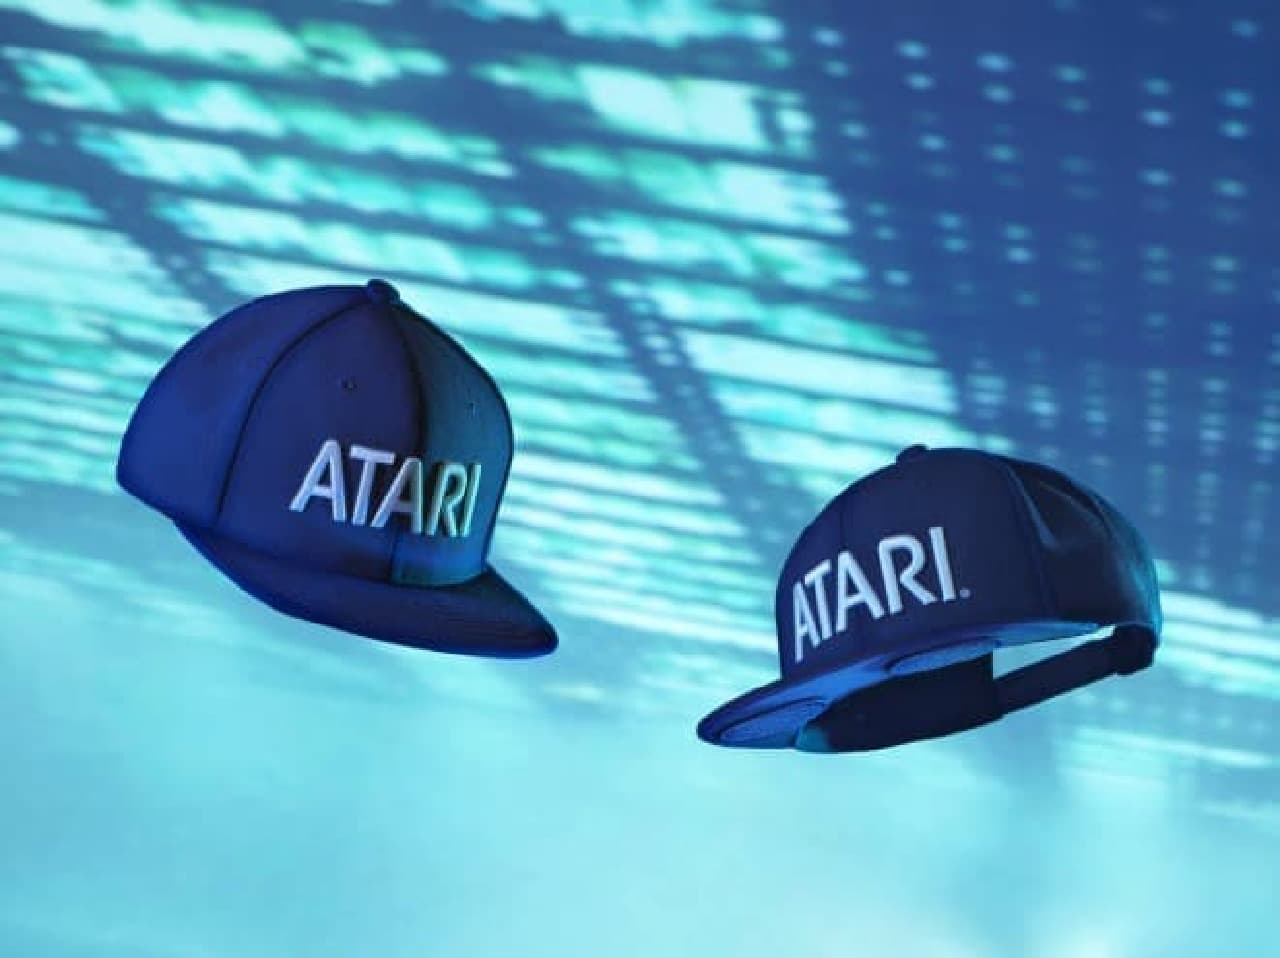 Attariのキャップ型スピーカー「Atari Speakerhat」